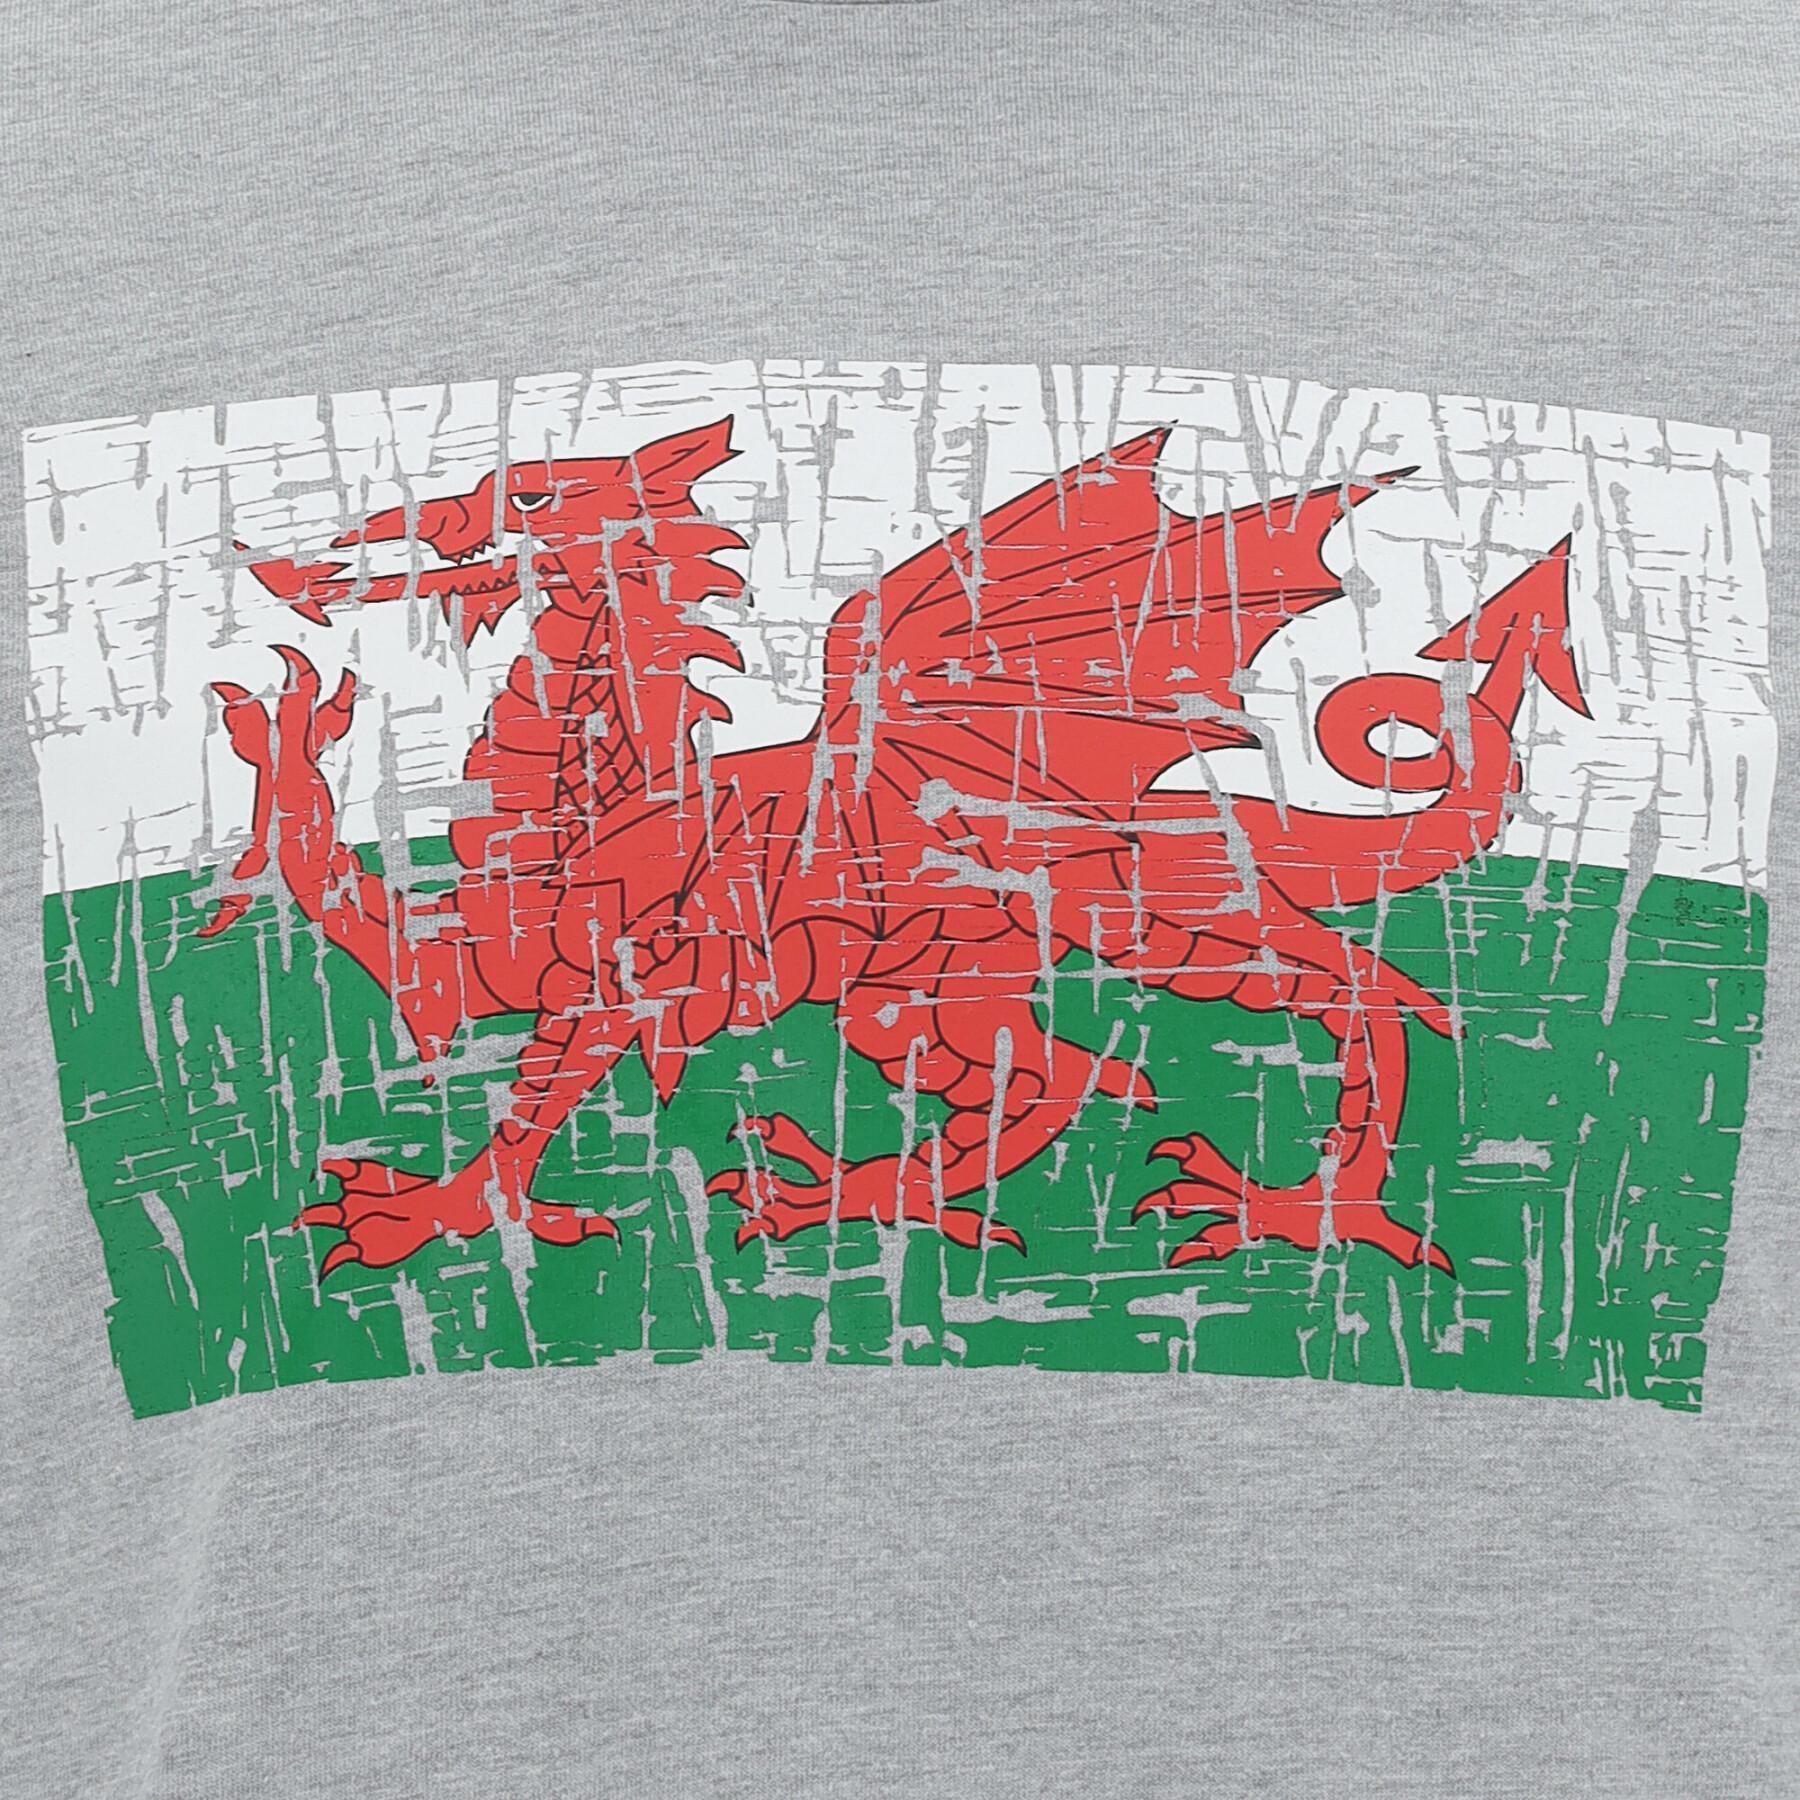 Cotton T-shirt Pays de Galles Rugby XV 2020/21